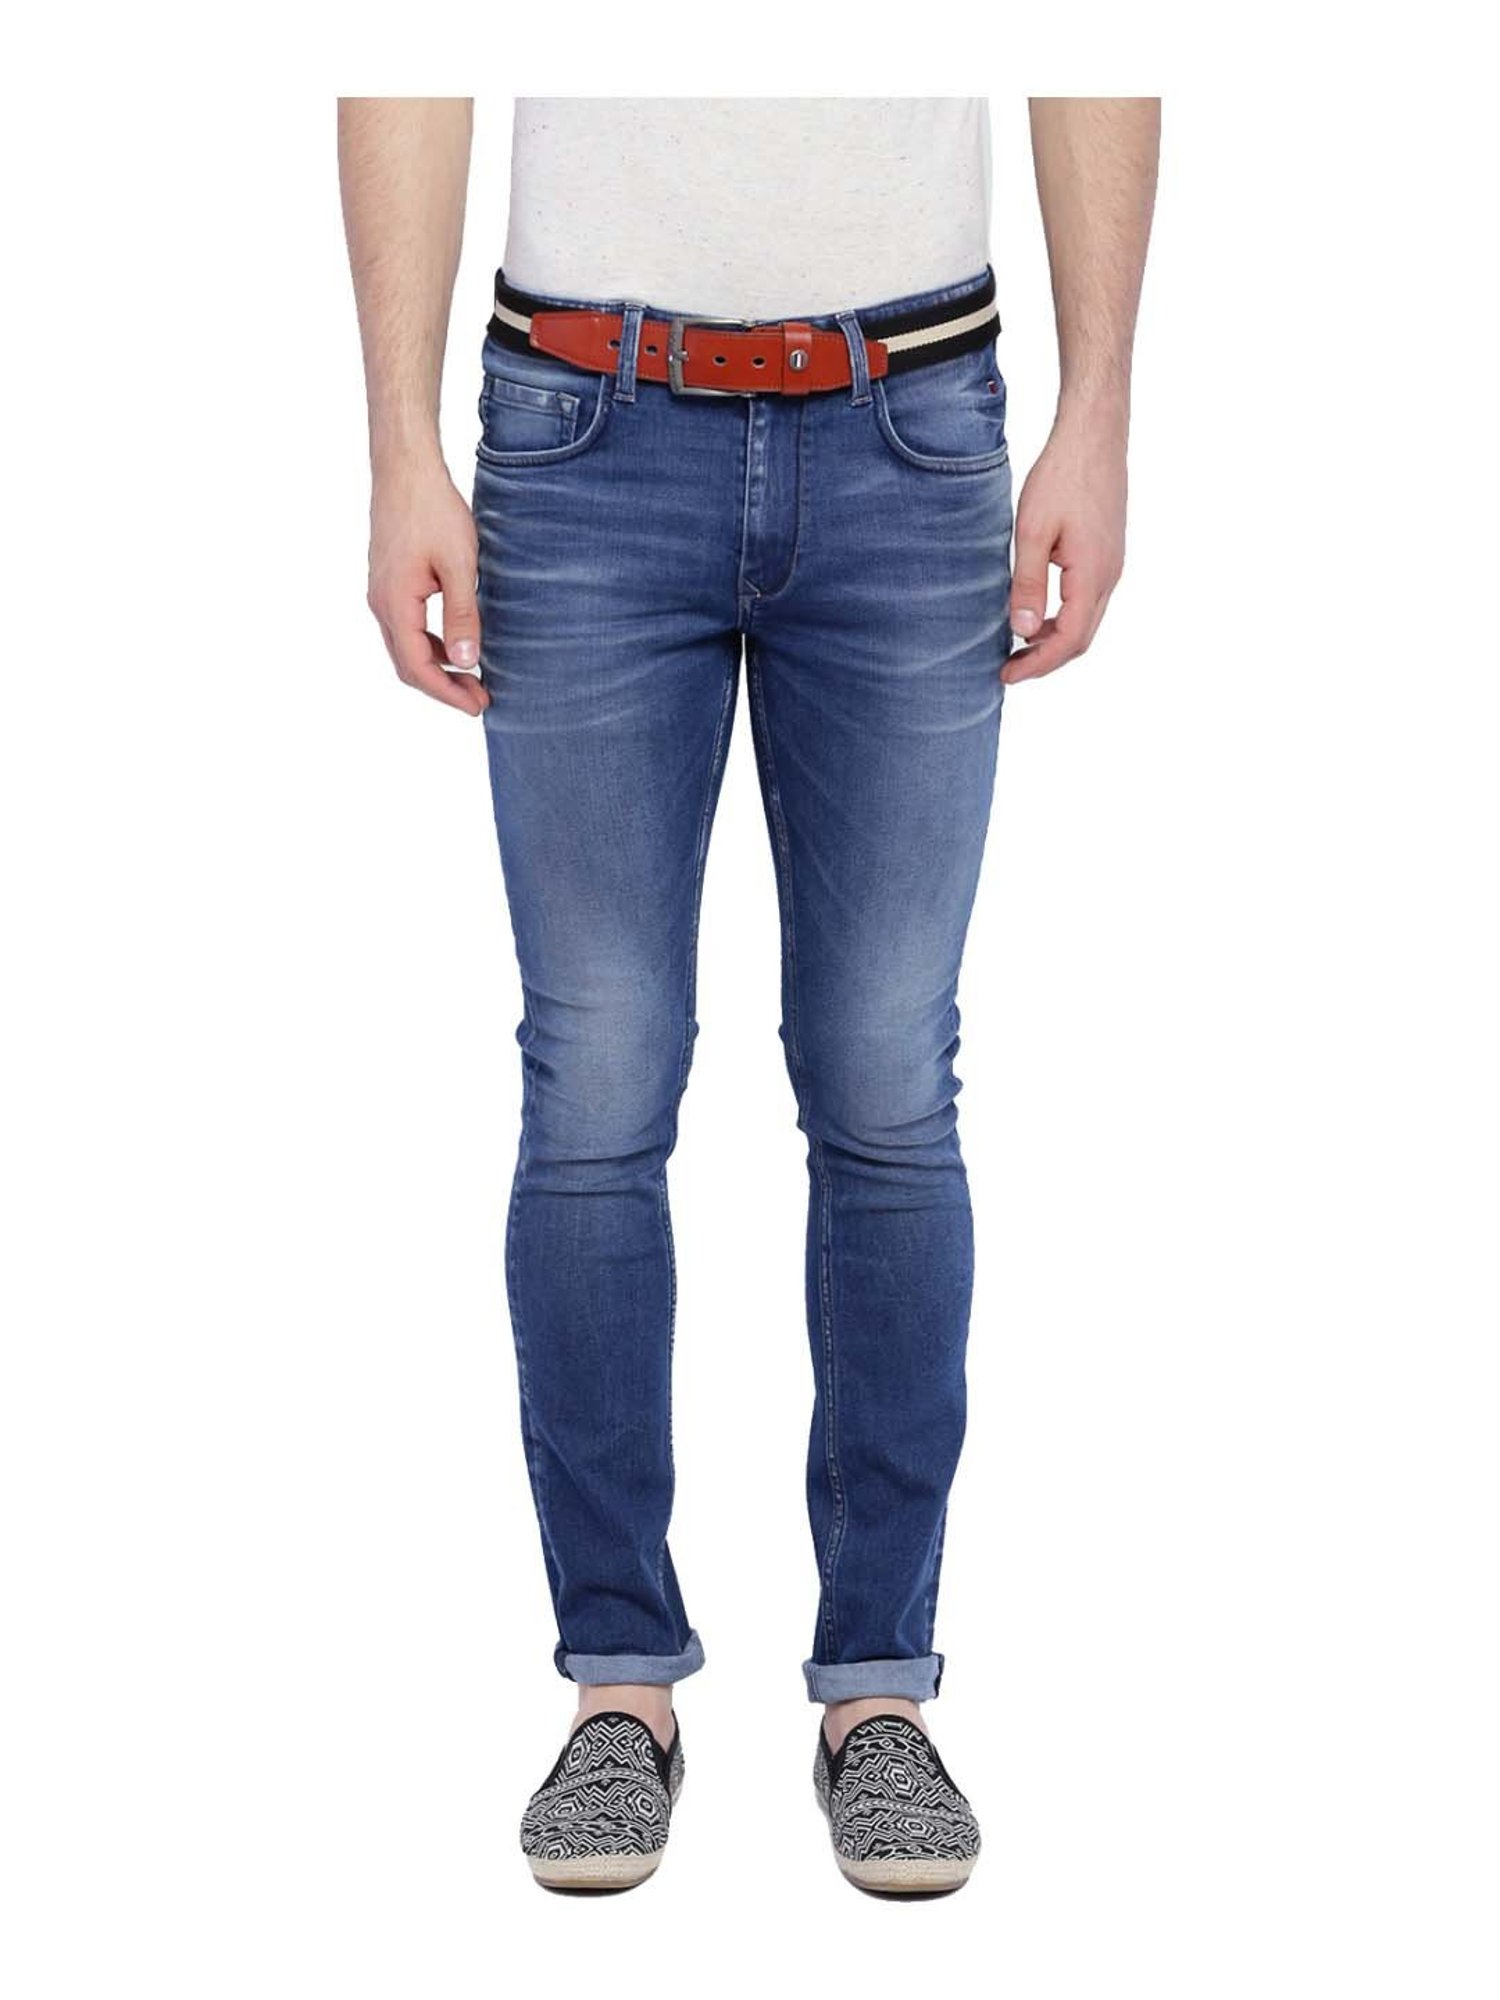 louis philippe jeans online